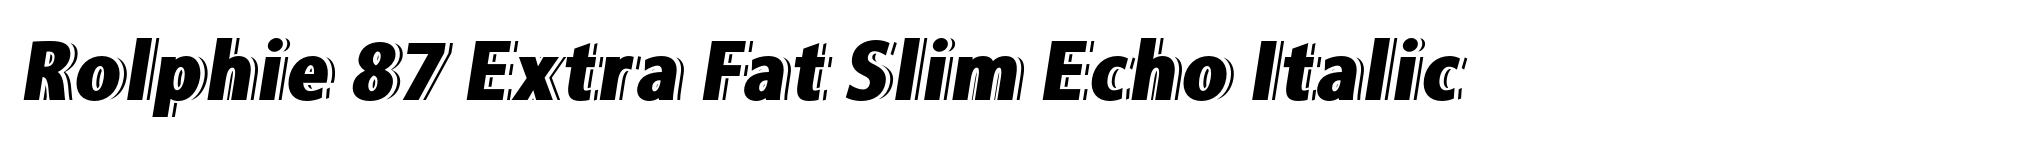 Rolphie 87 Extra Fat Slim Echo Italic image